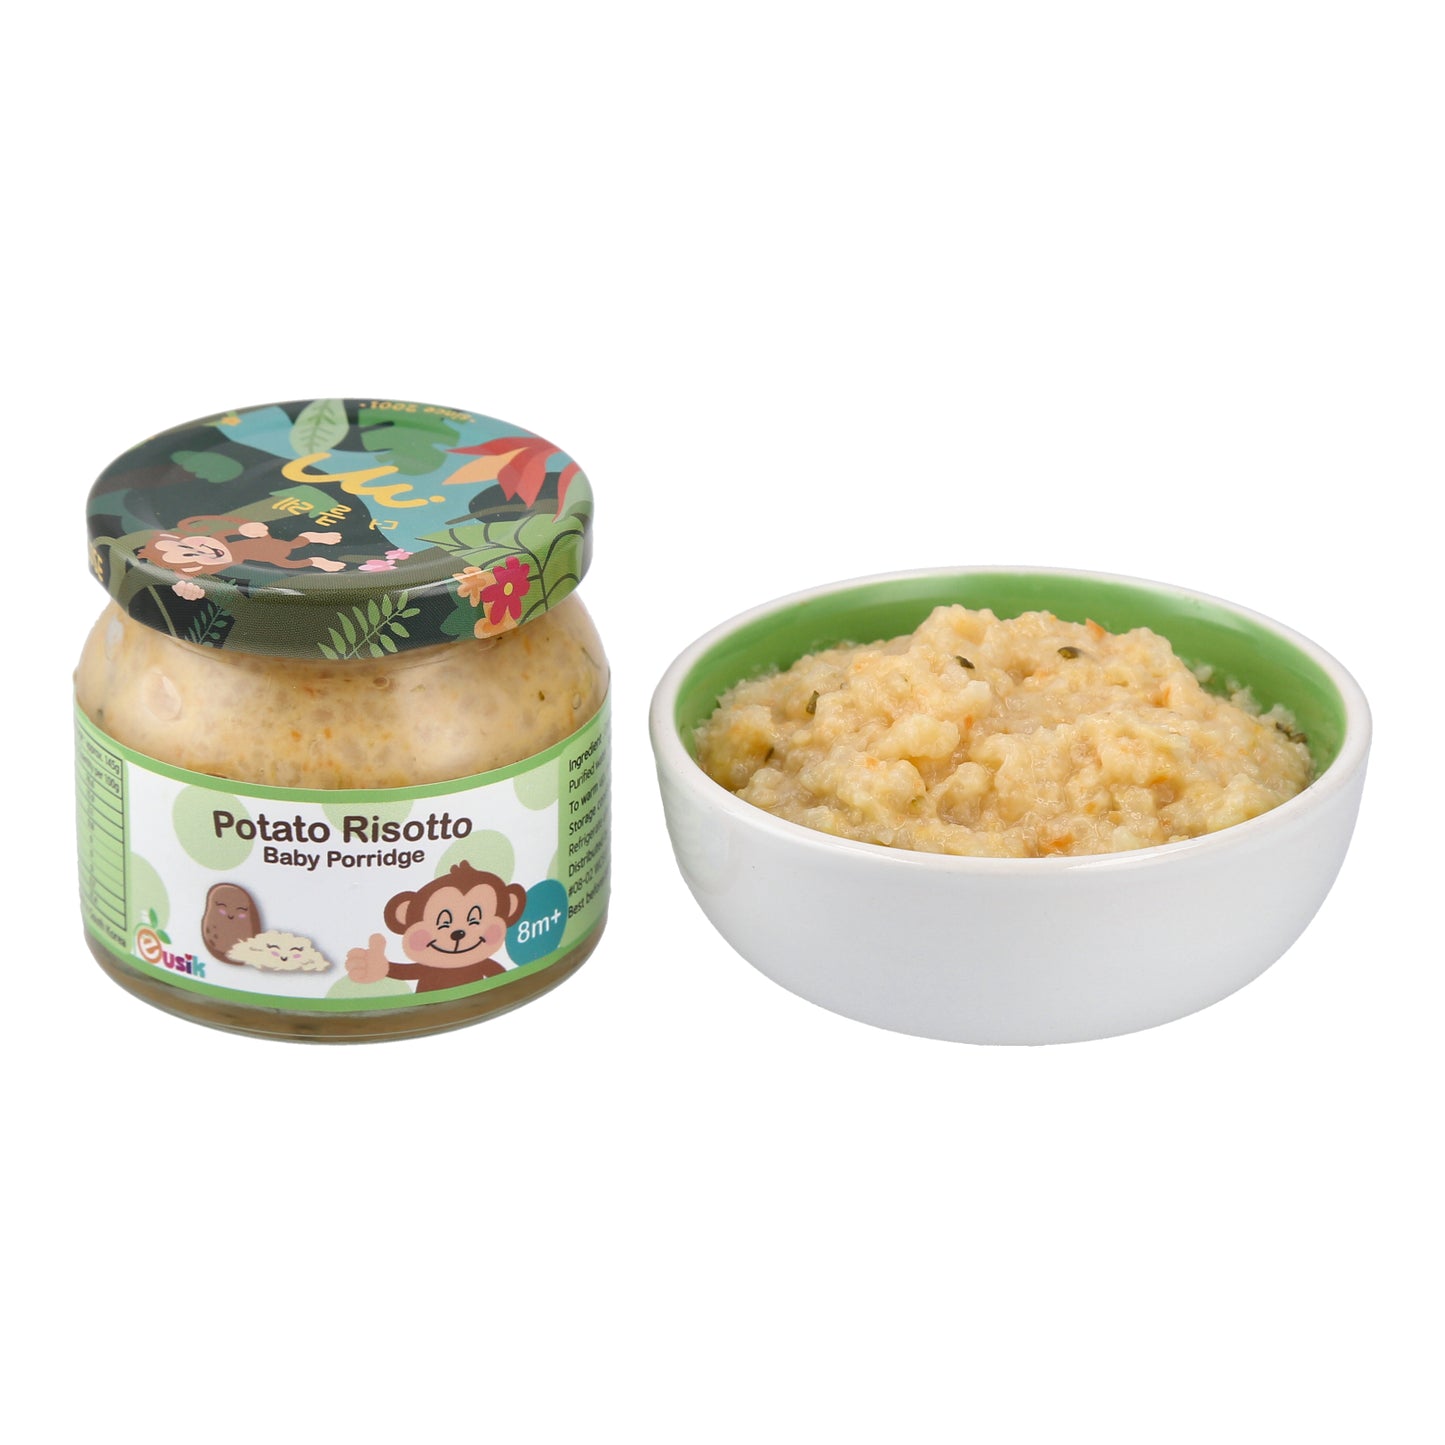 Eusik - 8-Pk Baby Rice Porridge (Potato Risotto) 145g, 8mths+